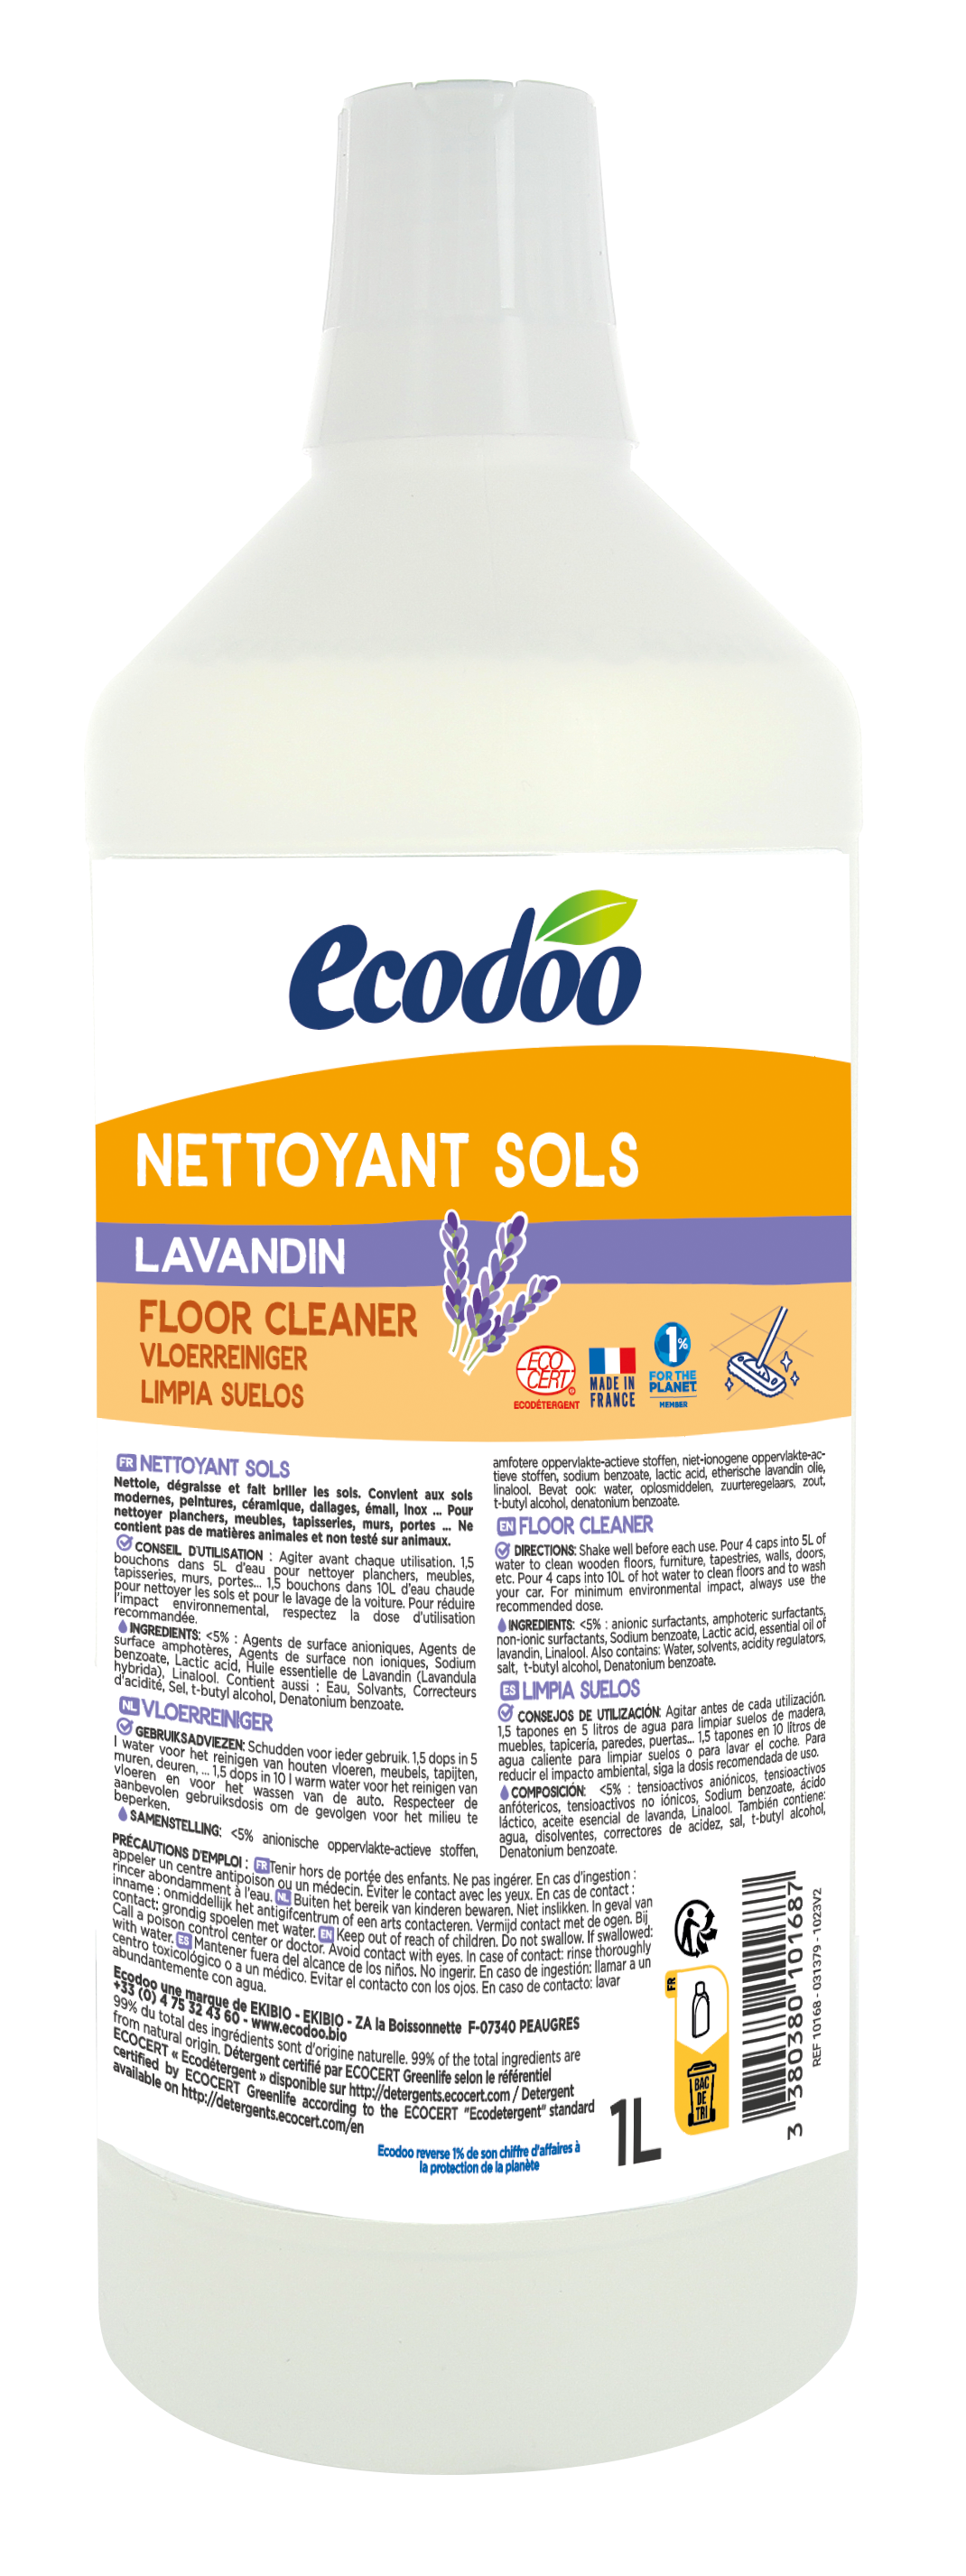 Ecodoo yleispuhdistusaine laventeli, 1000 ml